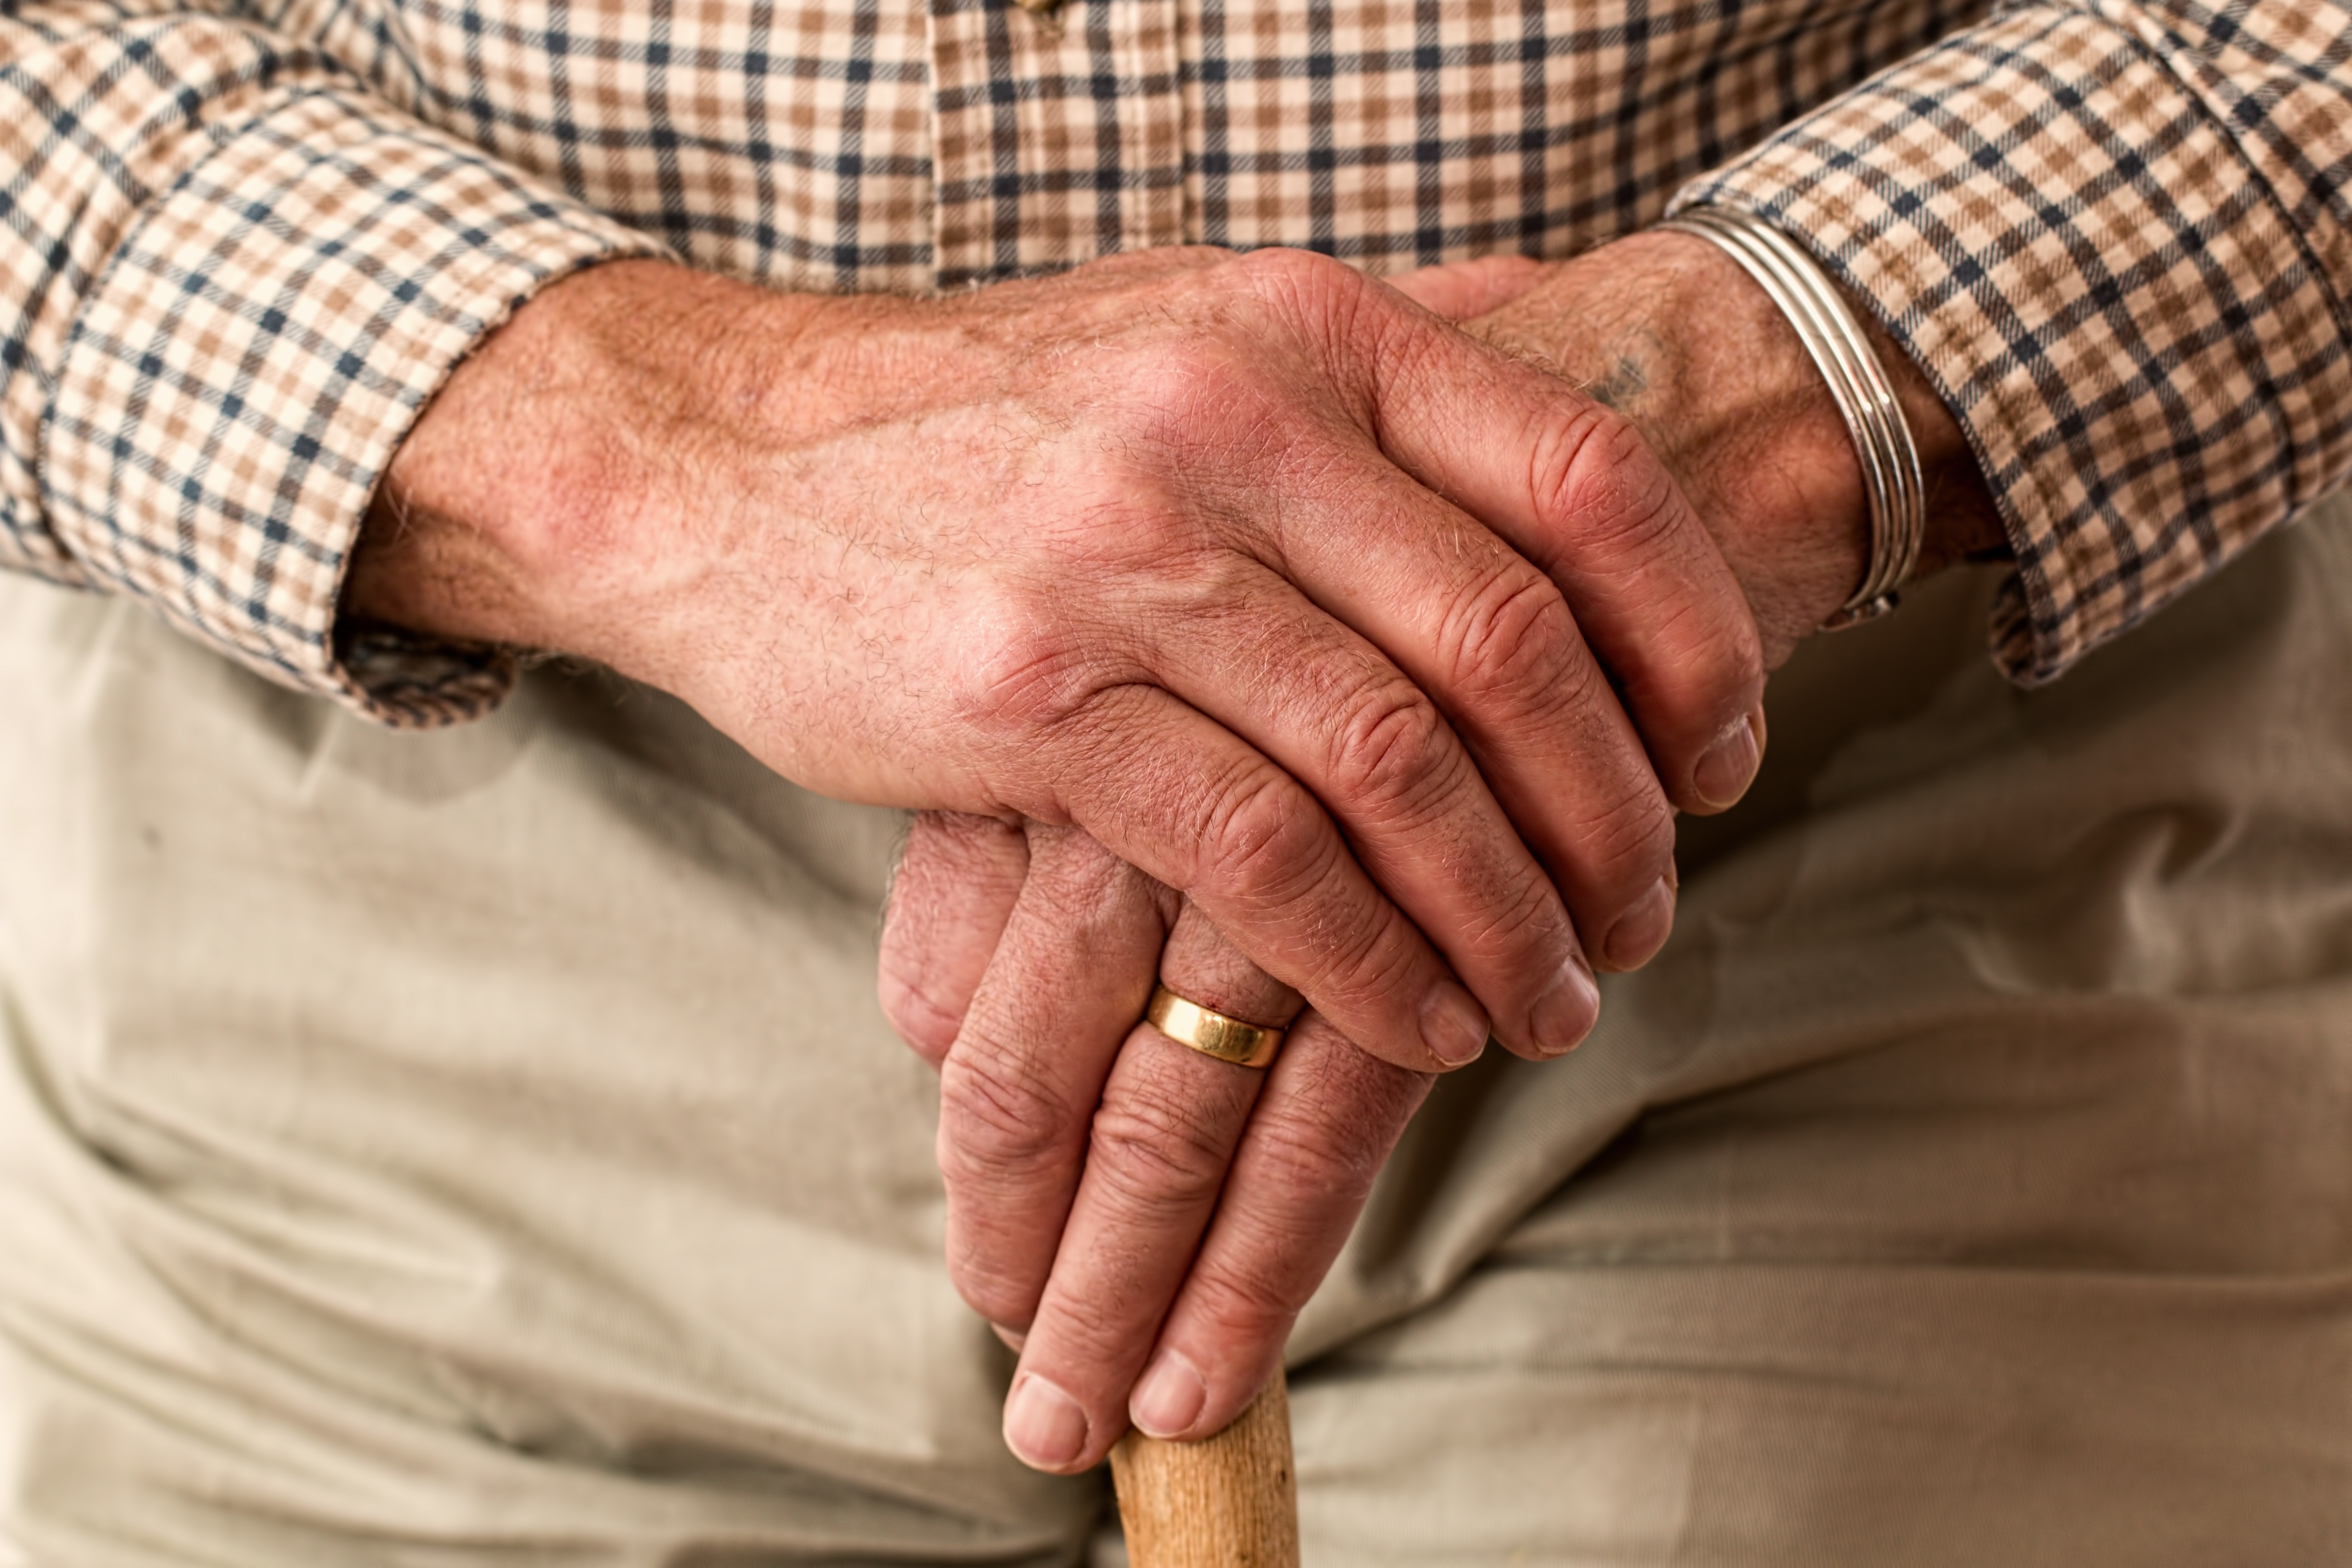 retire-retirement-entrepreneur-hands-walking-stick-elderly-old-person